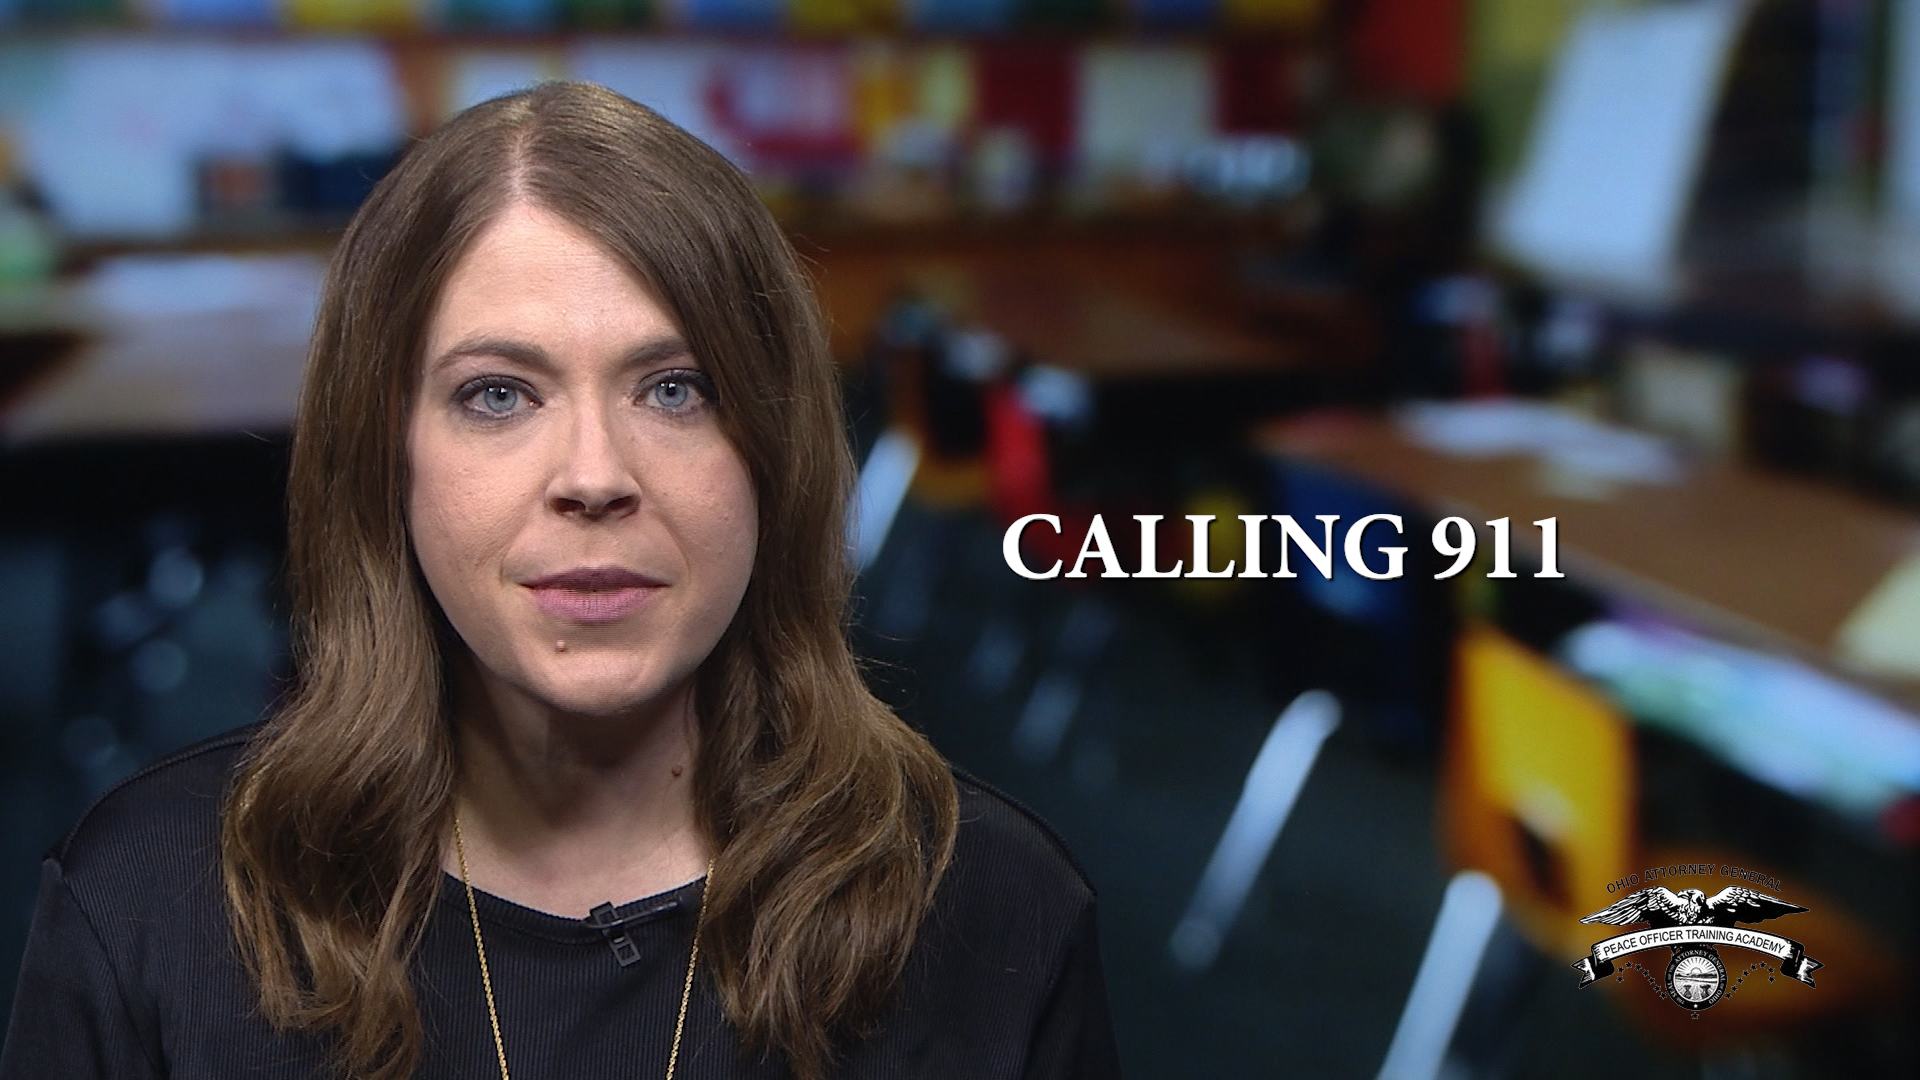 Video 7: Calling 911